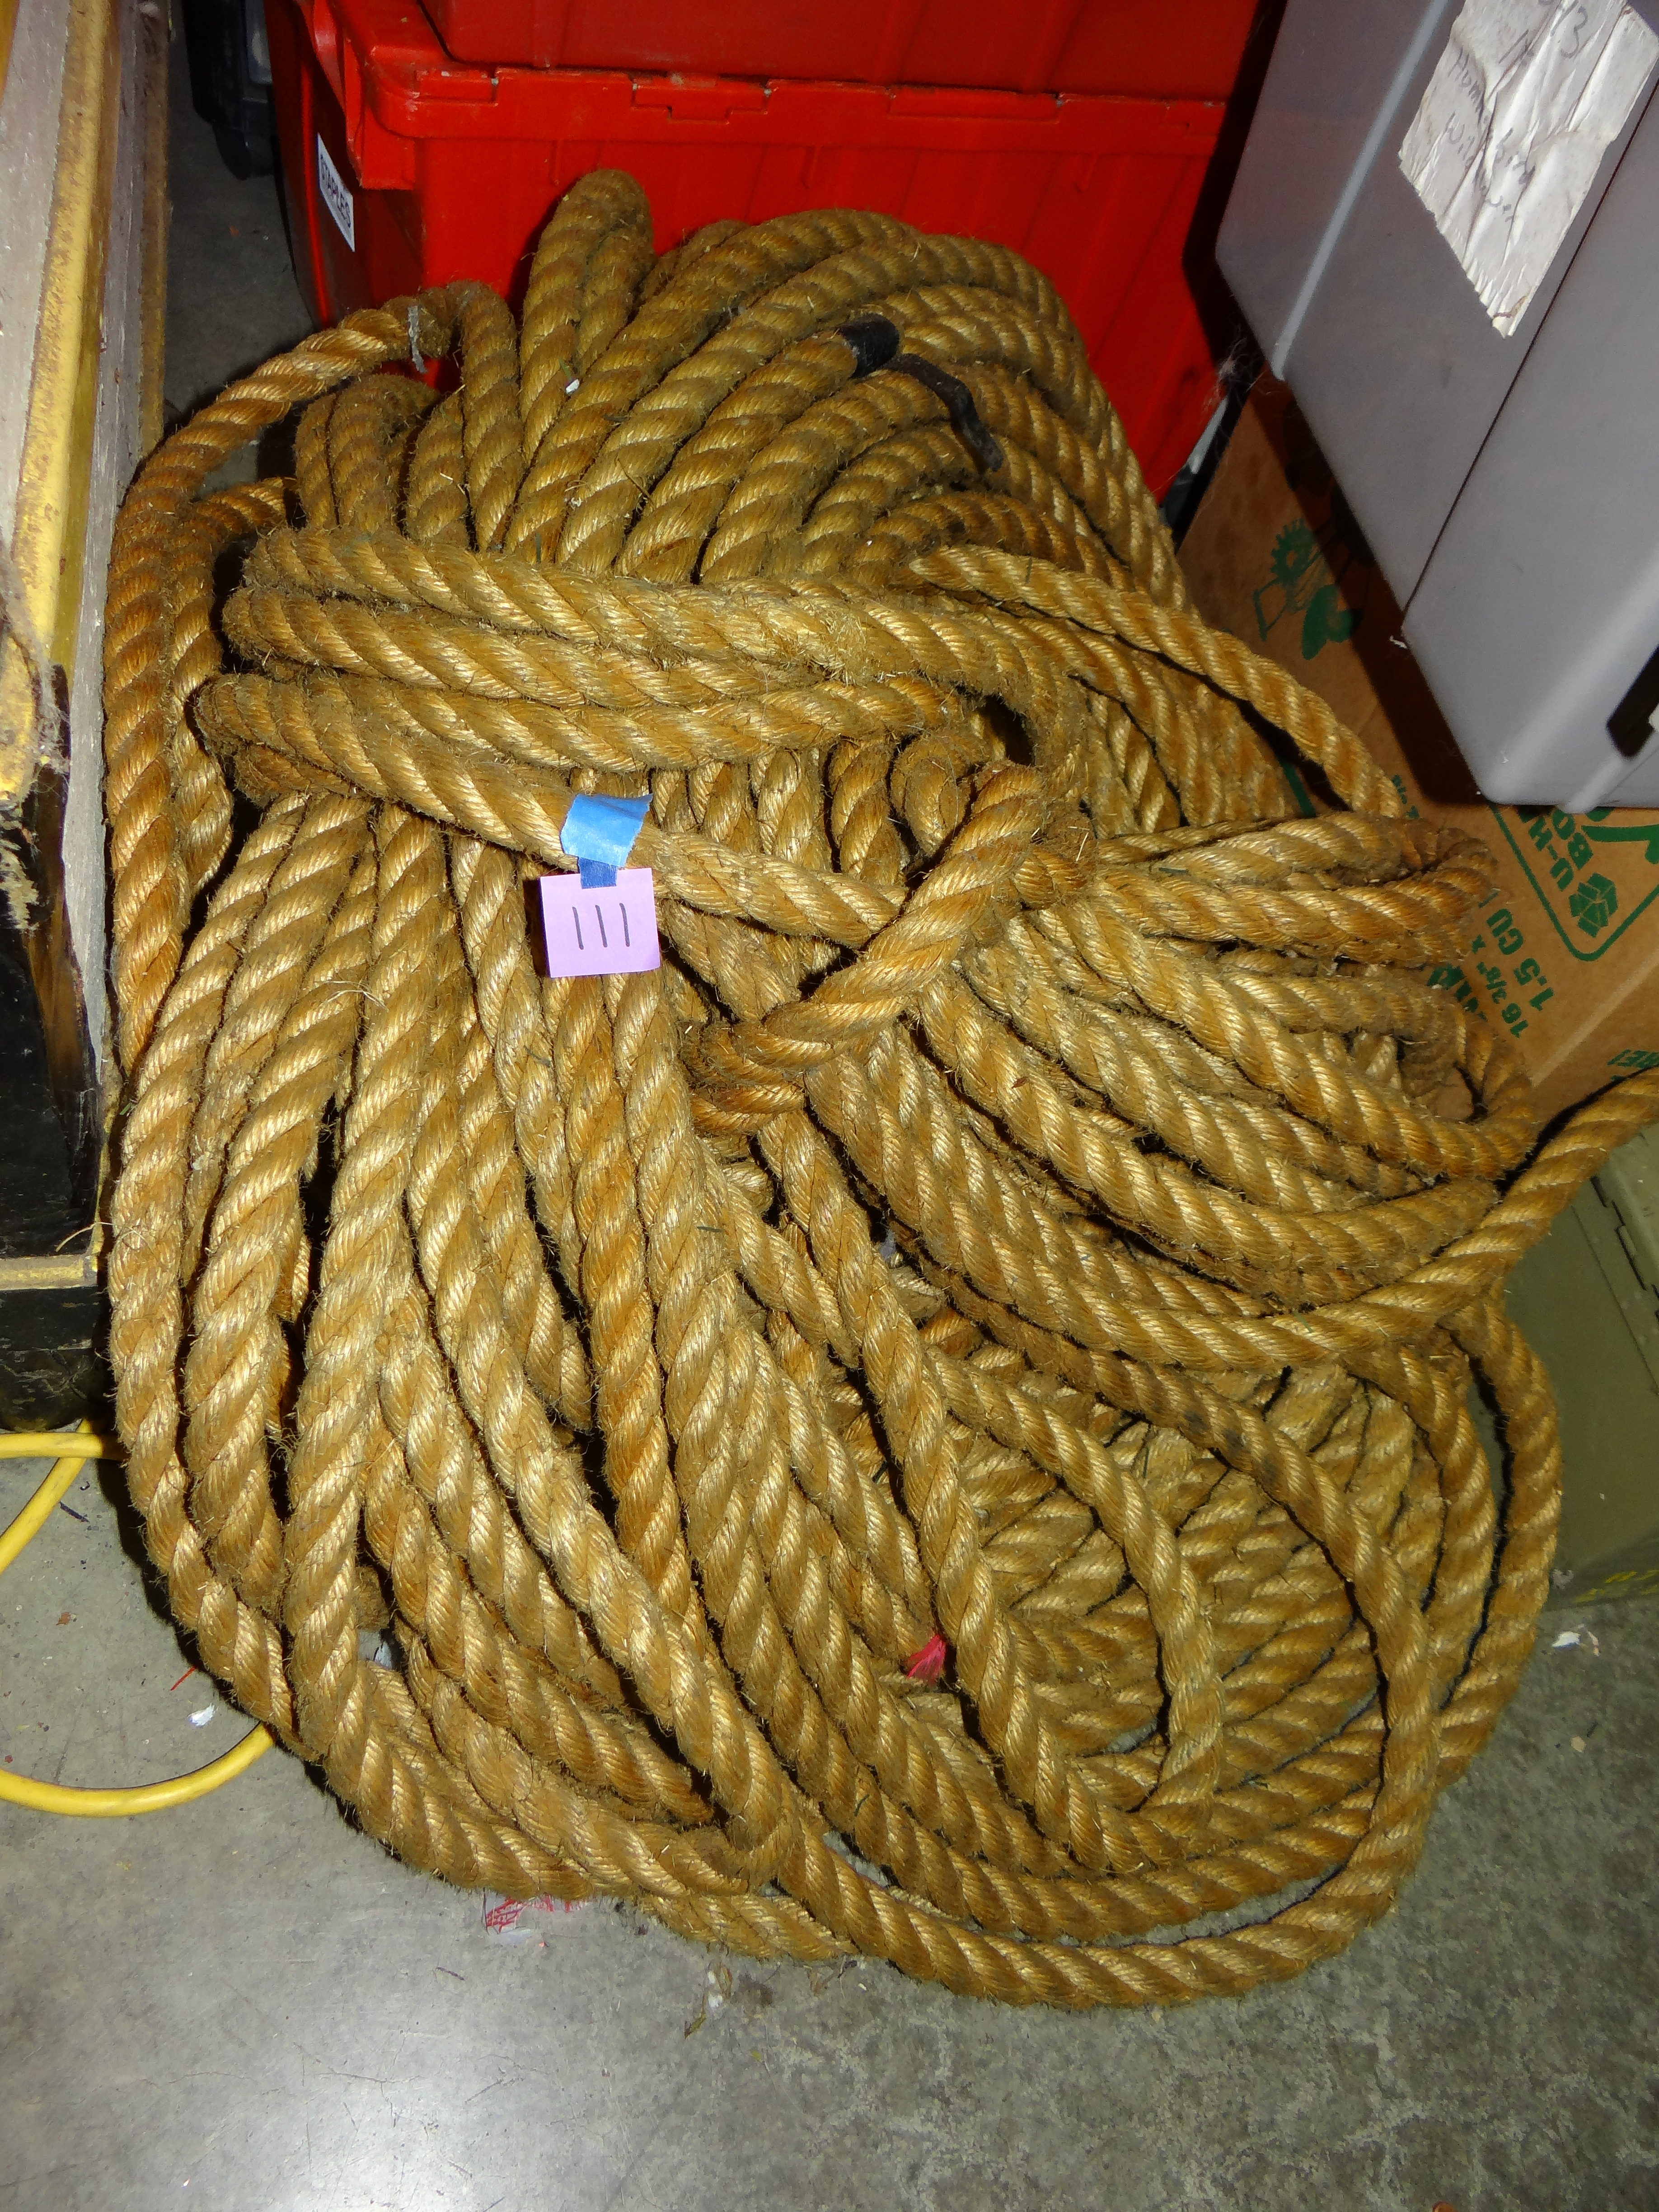 111-Large Bundle of Hemp Rope Approx. 1in Wide